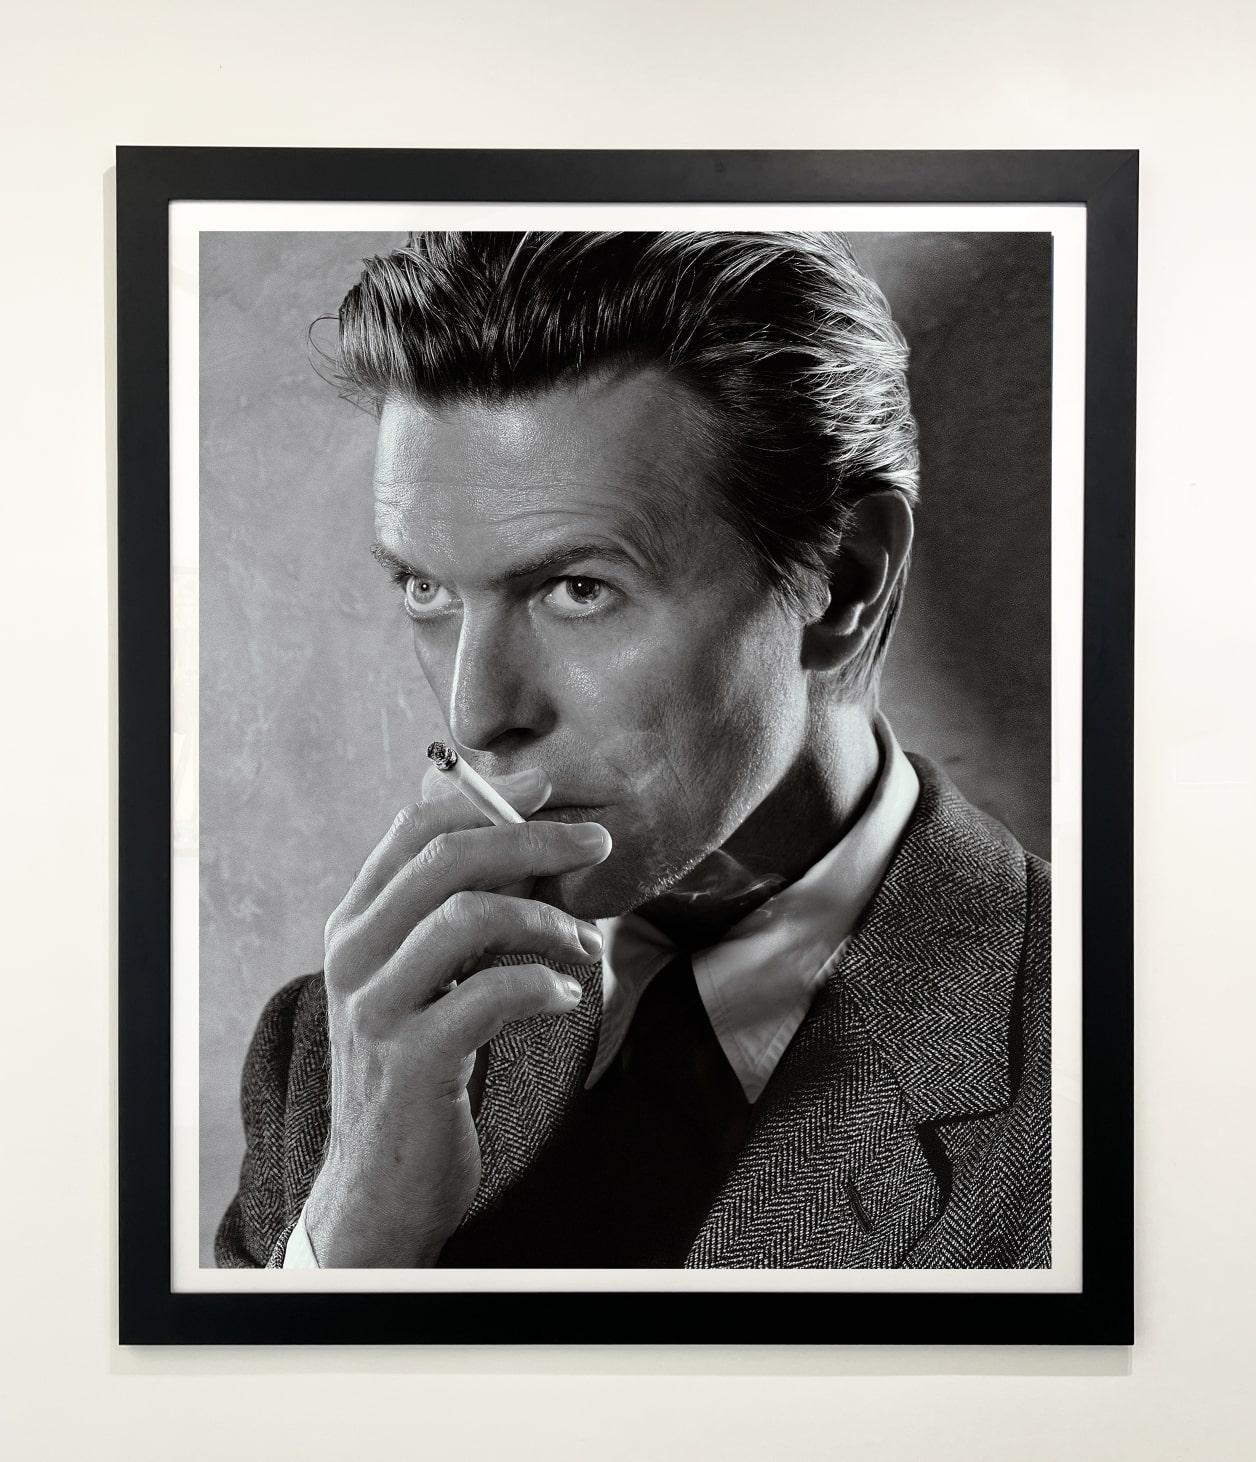 David Bowie, Smoking, Black & White - Contemporary Photograph by Markus Klinko